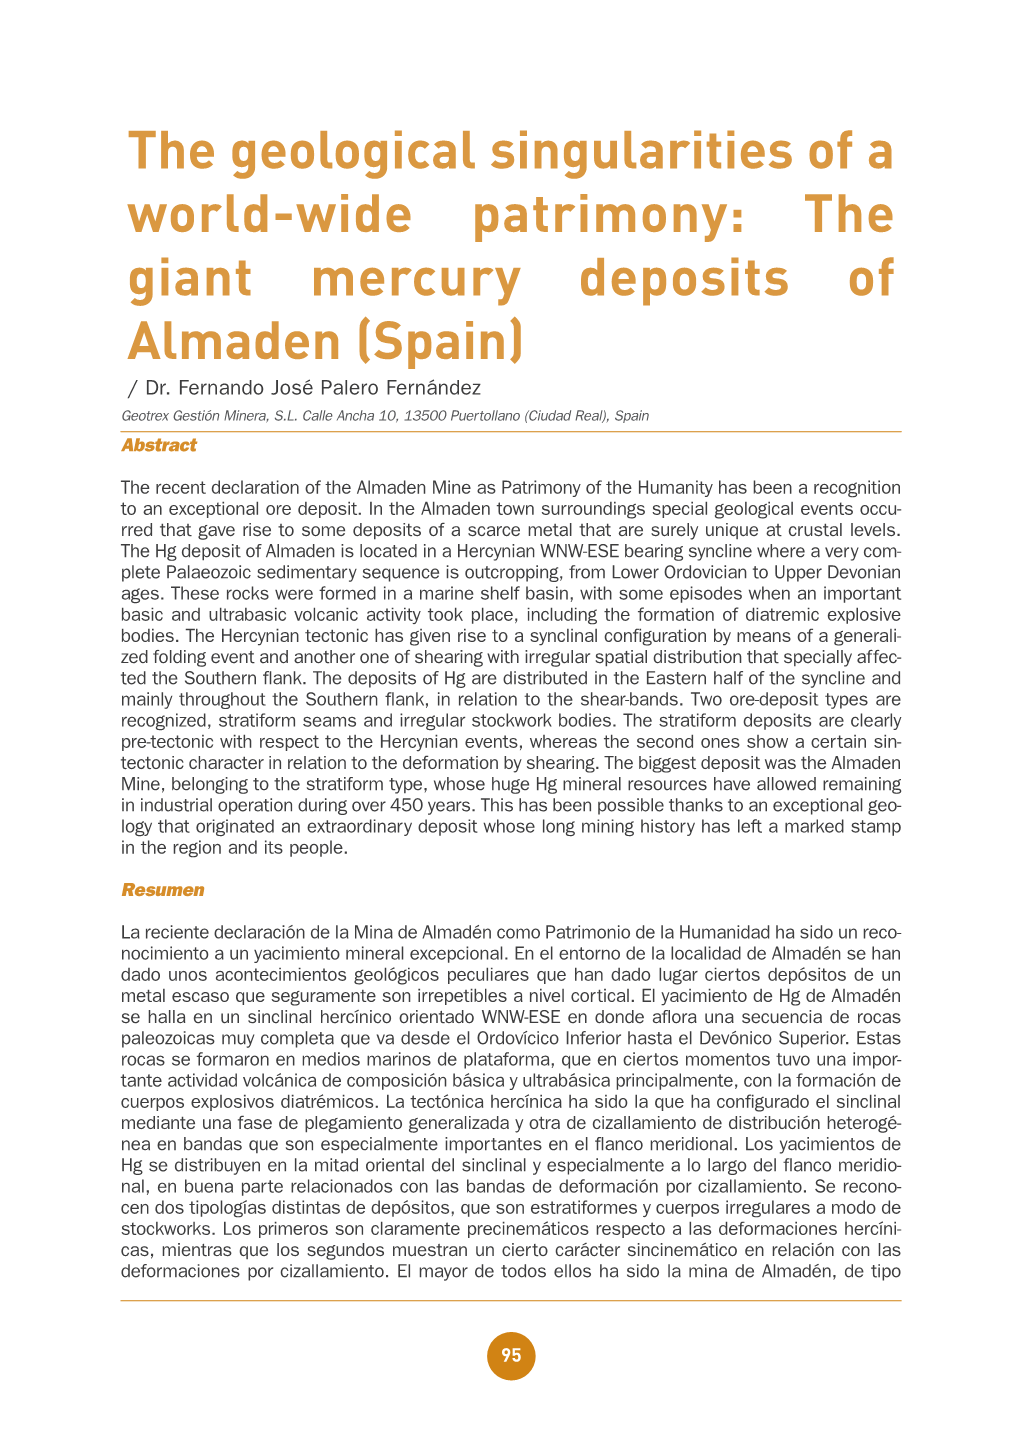 The Giant Mercury Deposits of Almaden (Spain) / Dr